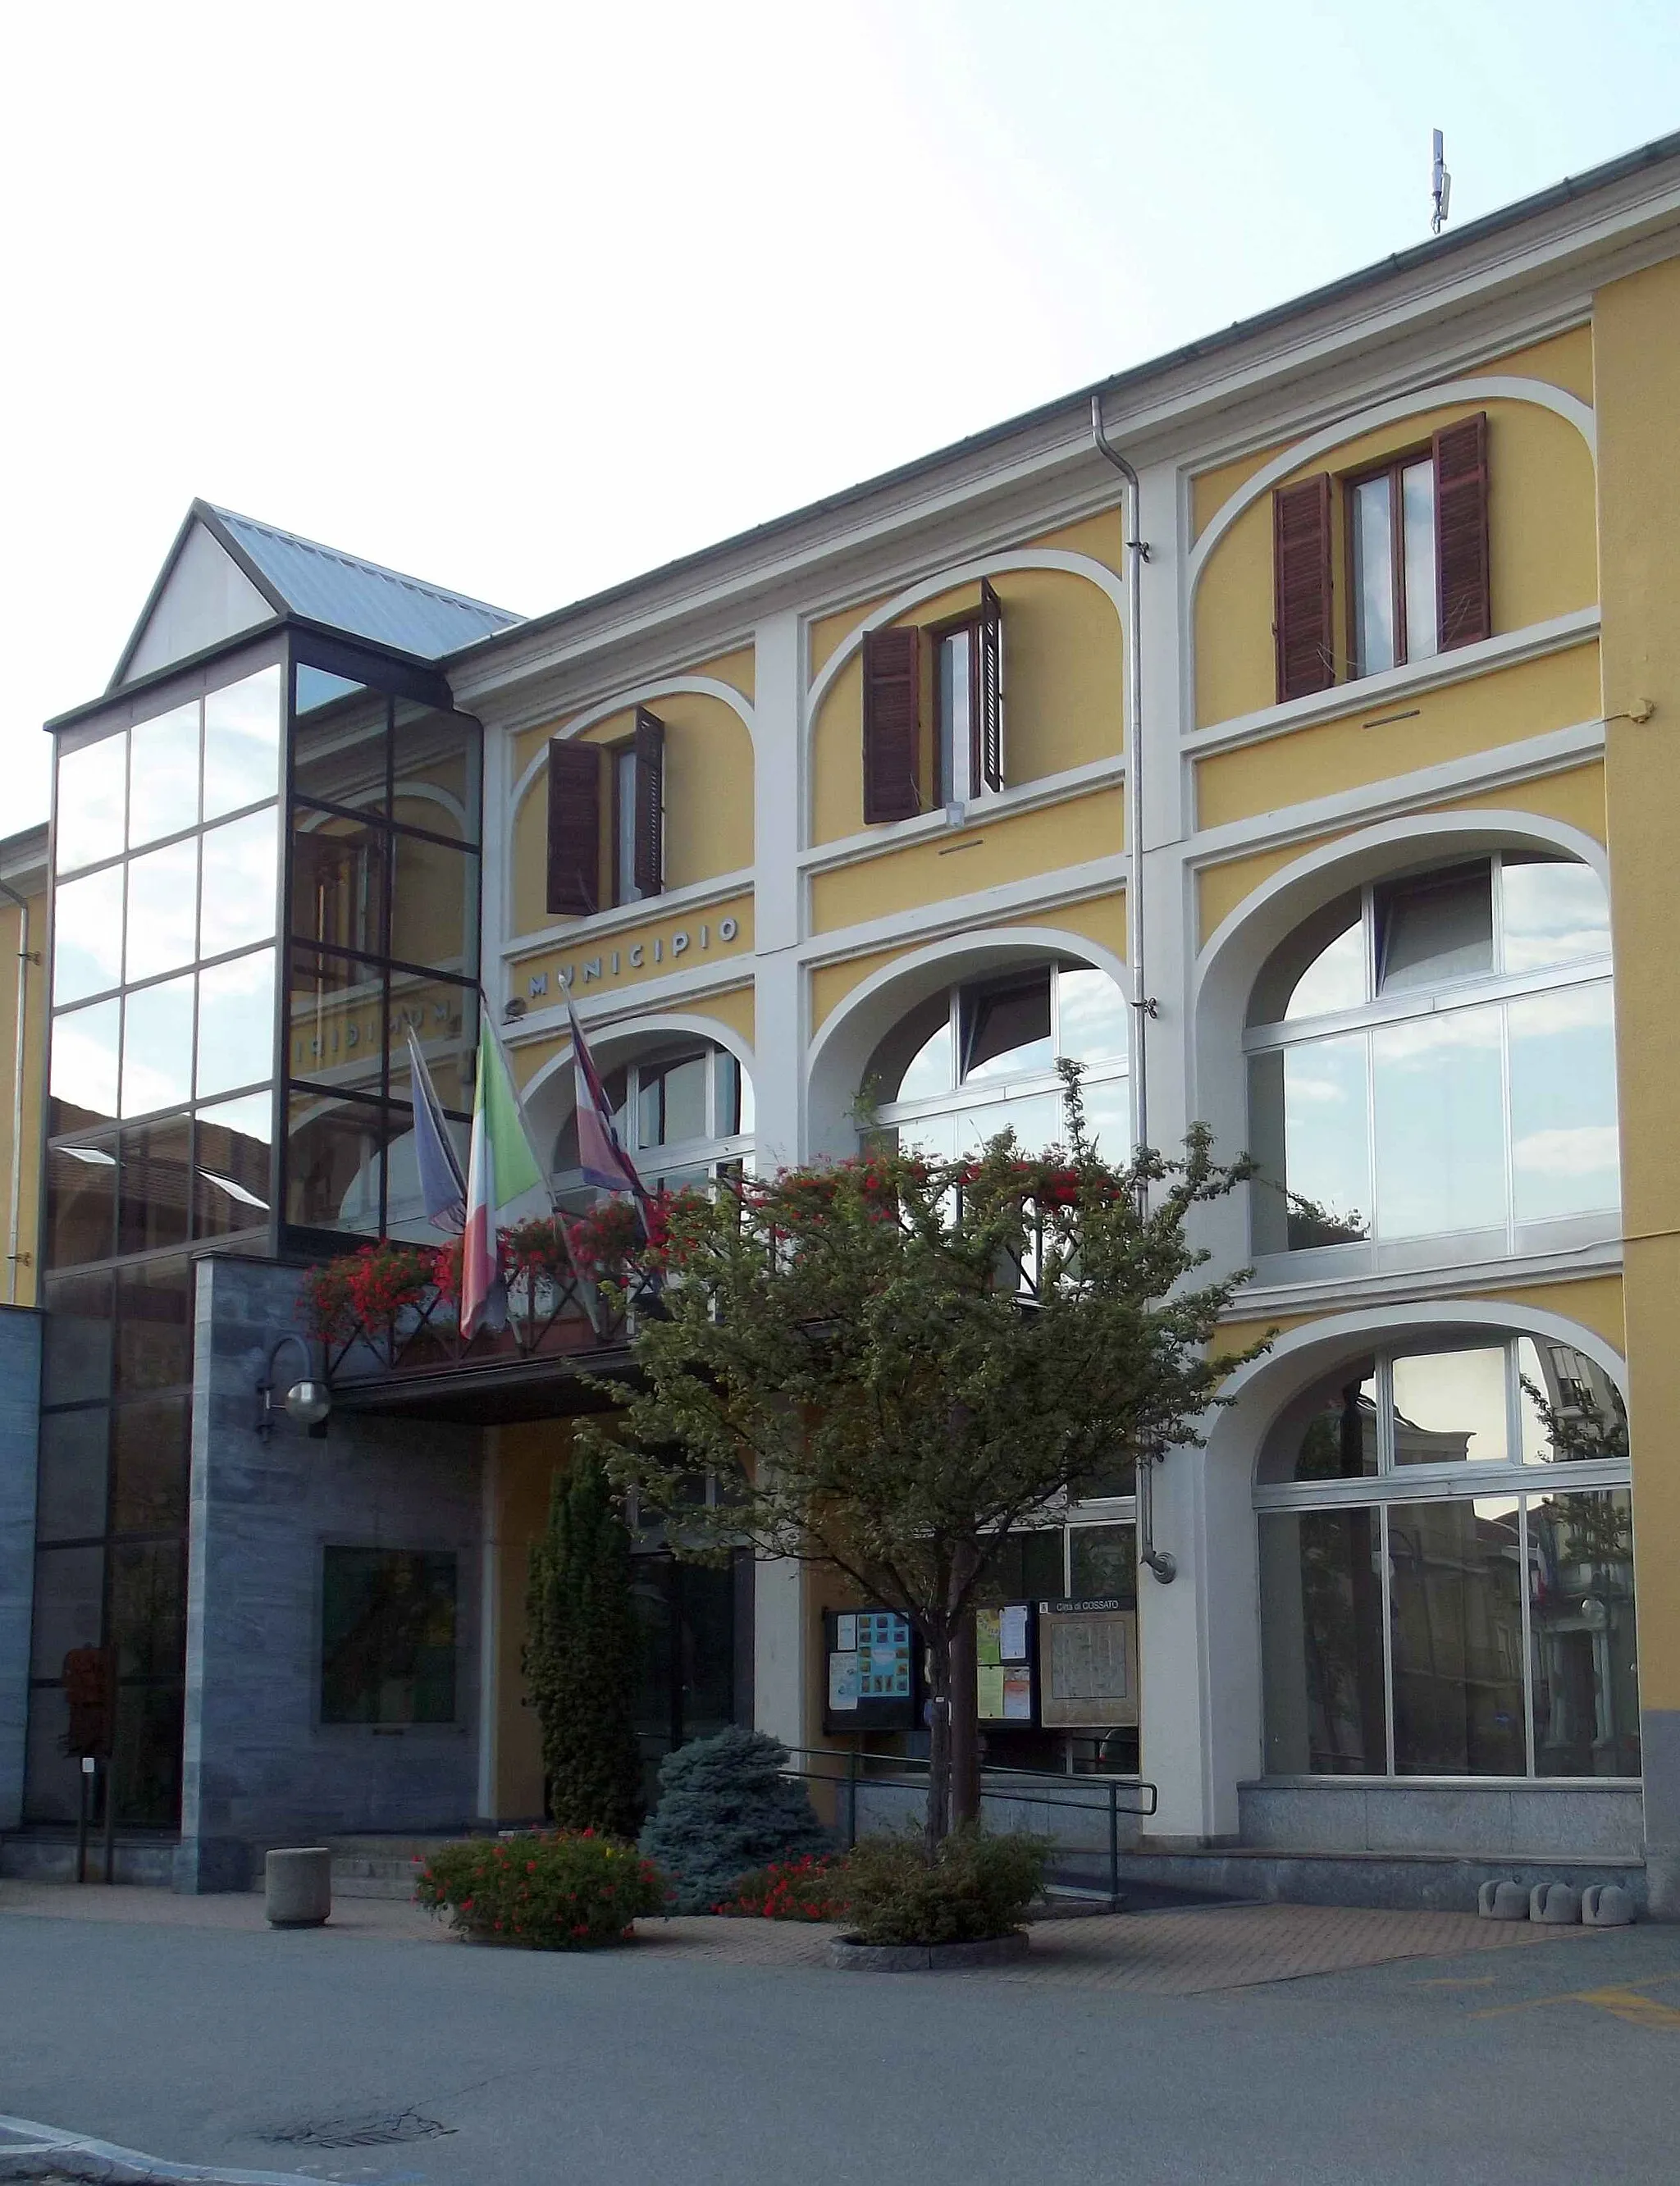 Photo showing: Cossato (BI, Italy): town hall